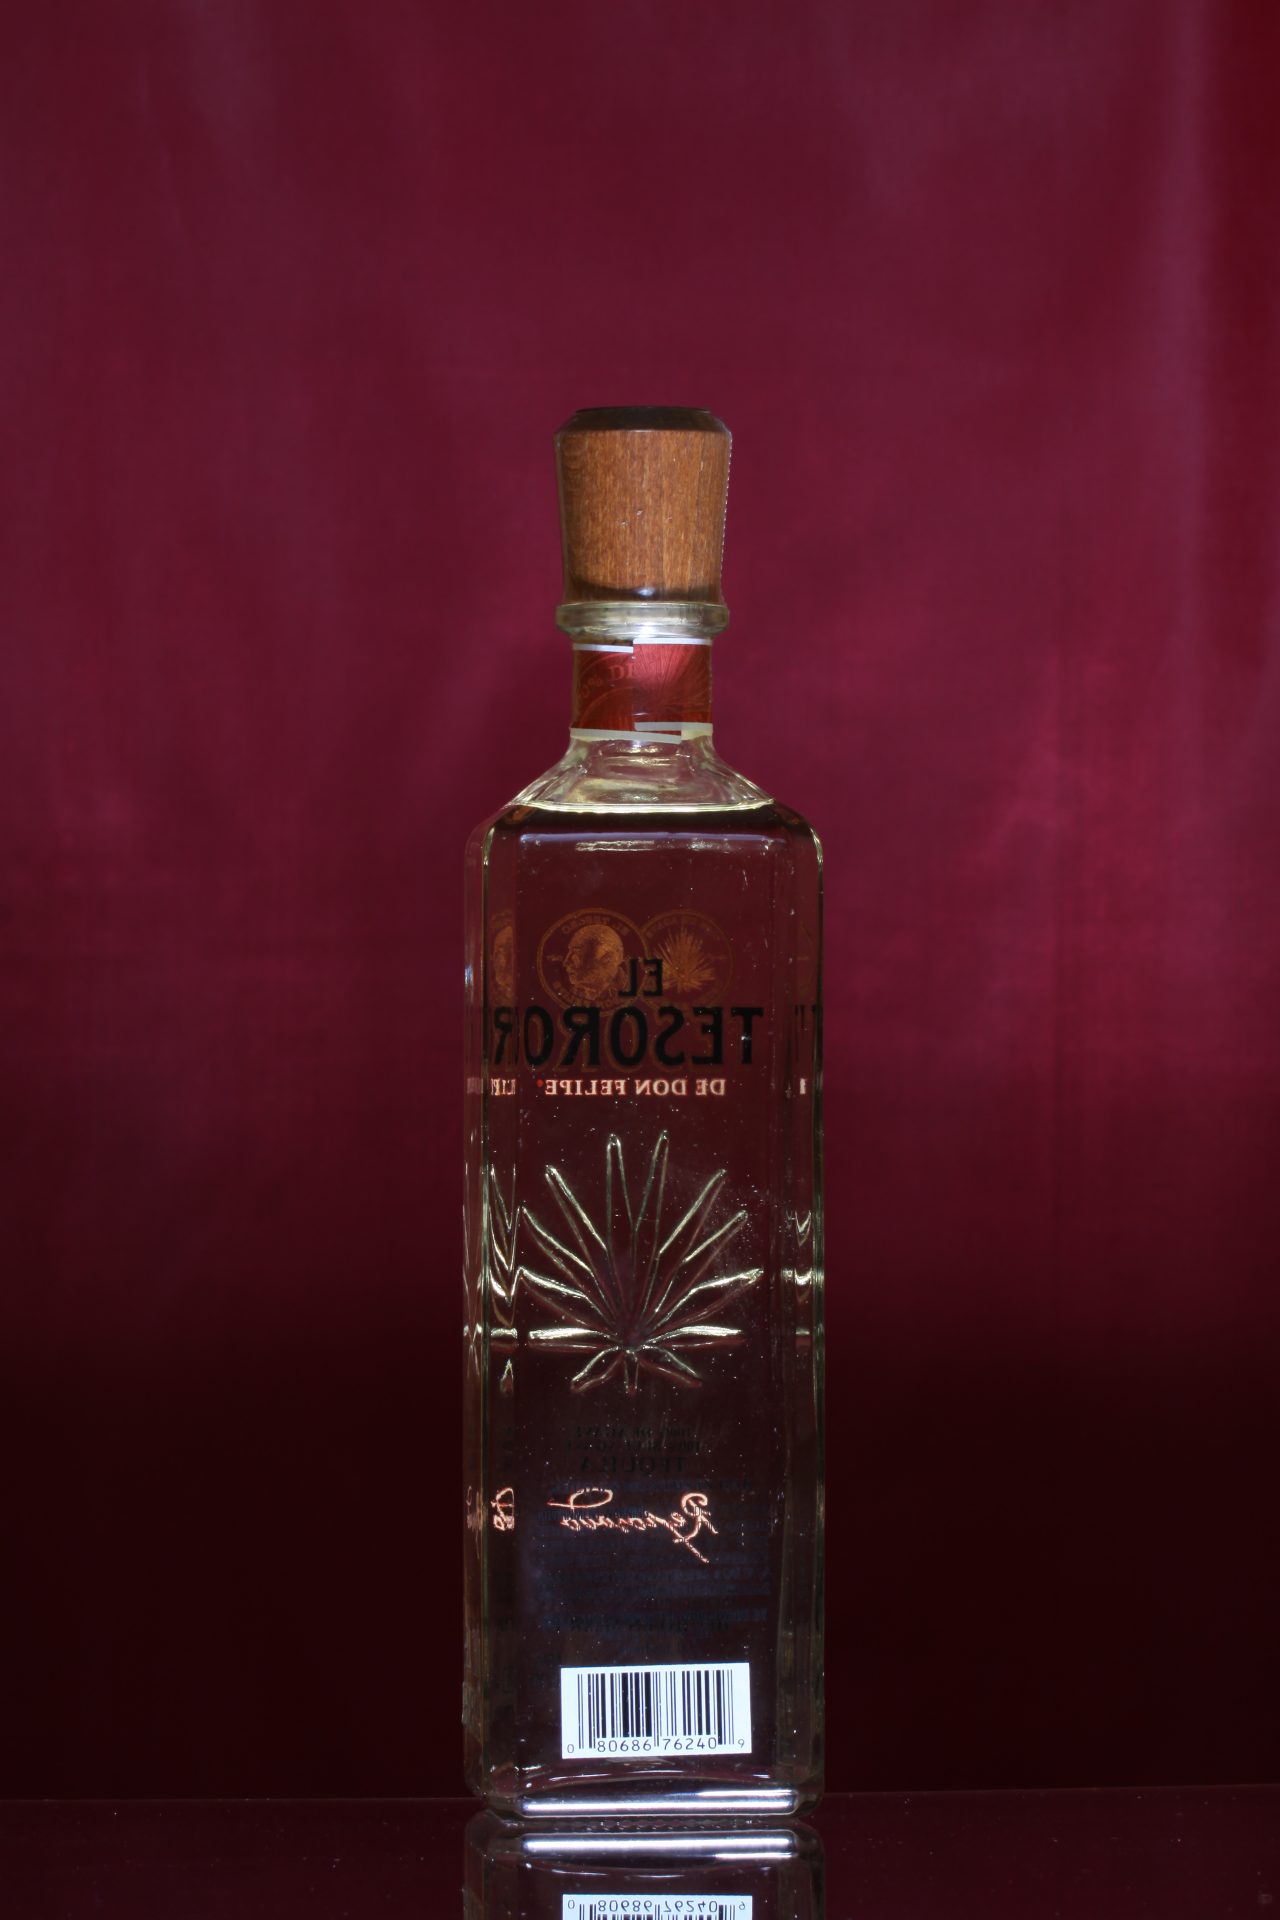 EL TESORO – The Liquor Collection